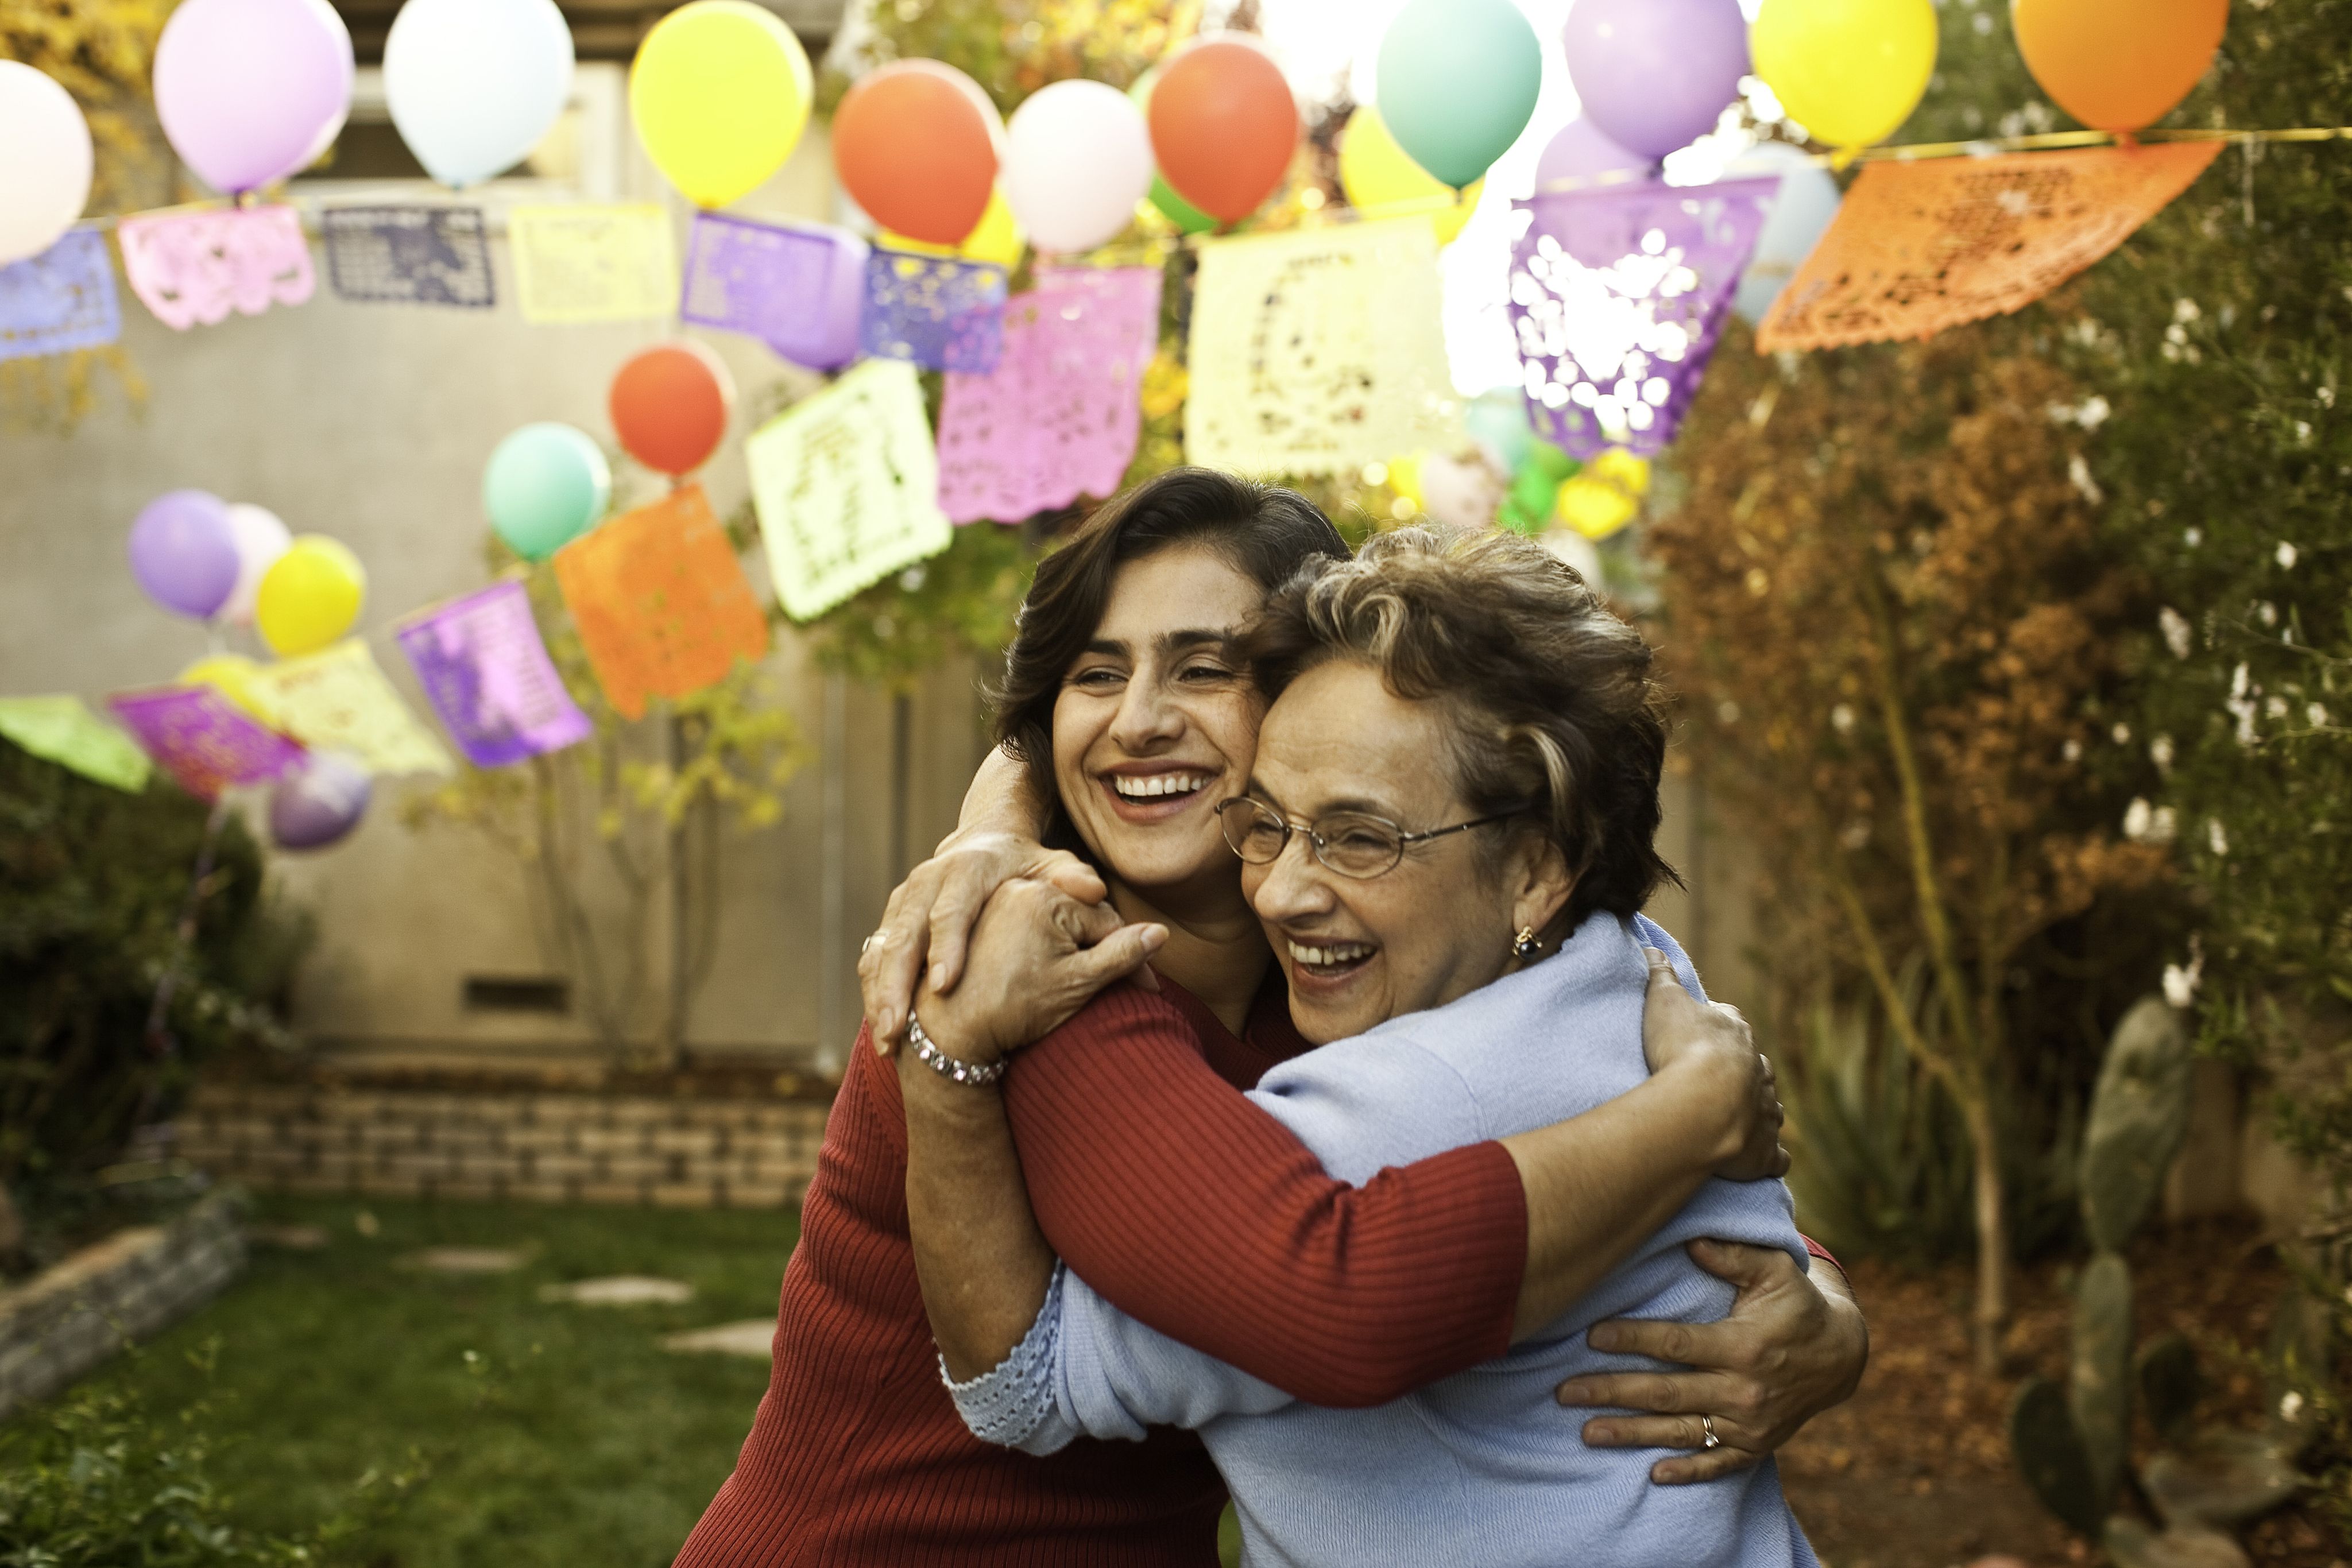 Hispanic Heritage Month: A Family Celebrates